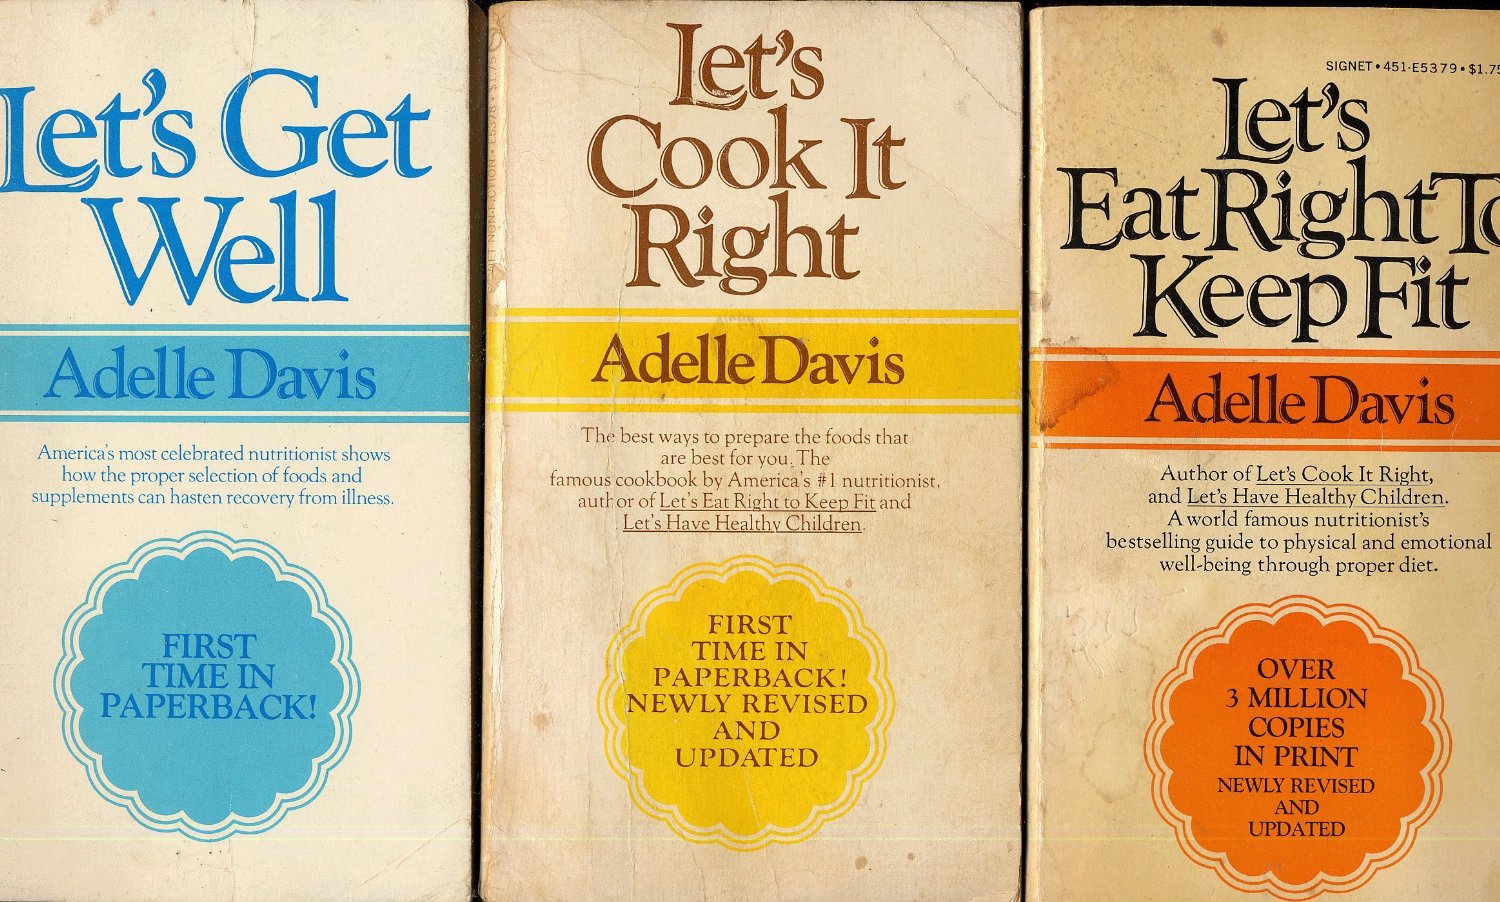 He cook now. Adele Davis. Lets Cook. Paperback lot of 12 Signet.